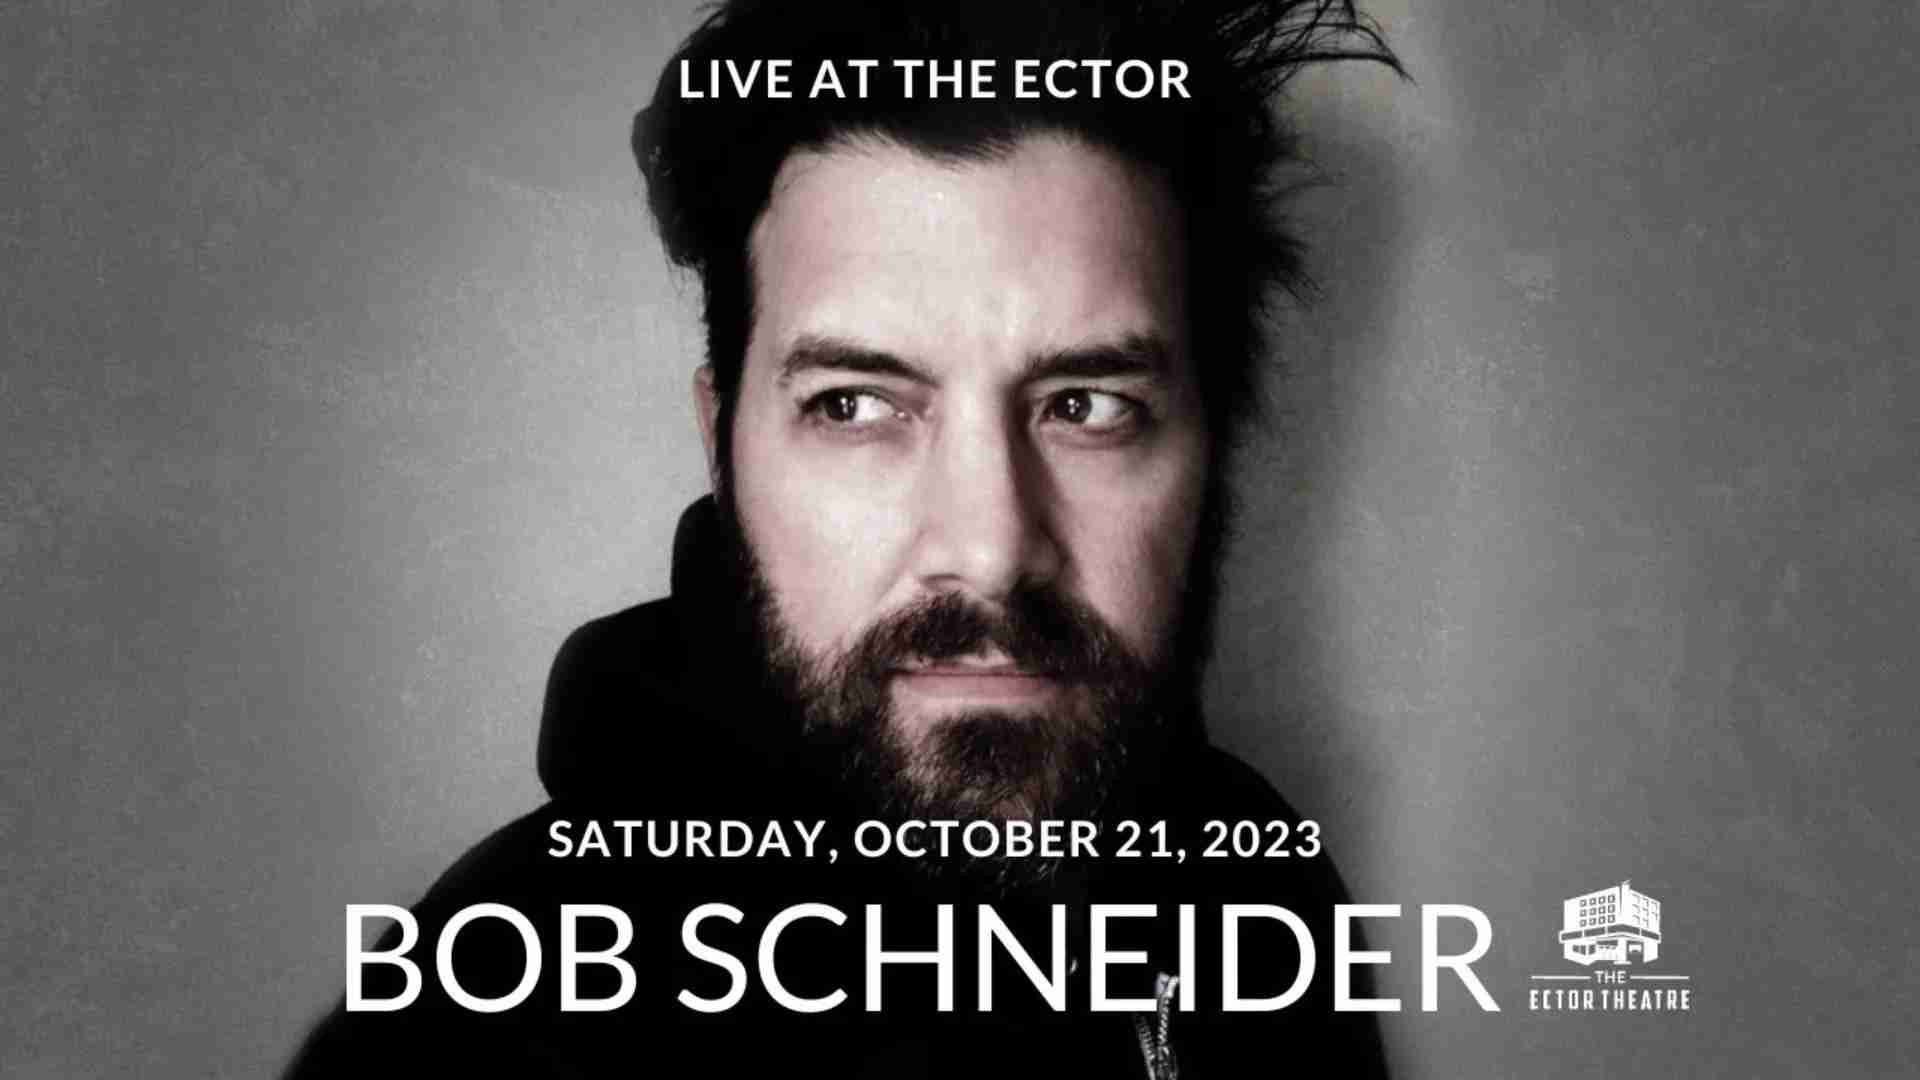 Bob Schneider at The Ector Theatre on October 21, 2023 in Odessa, TX